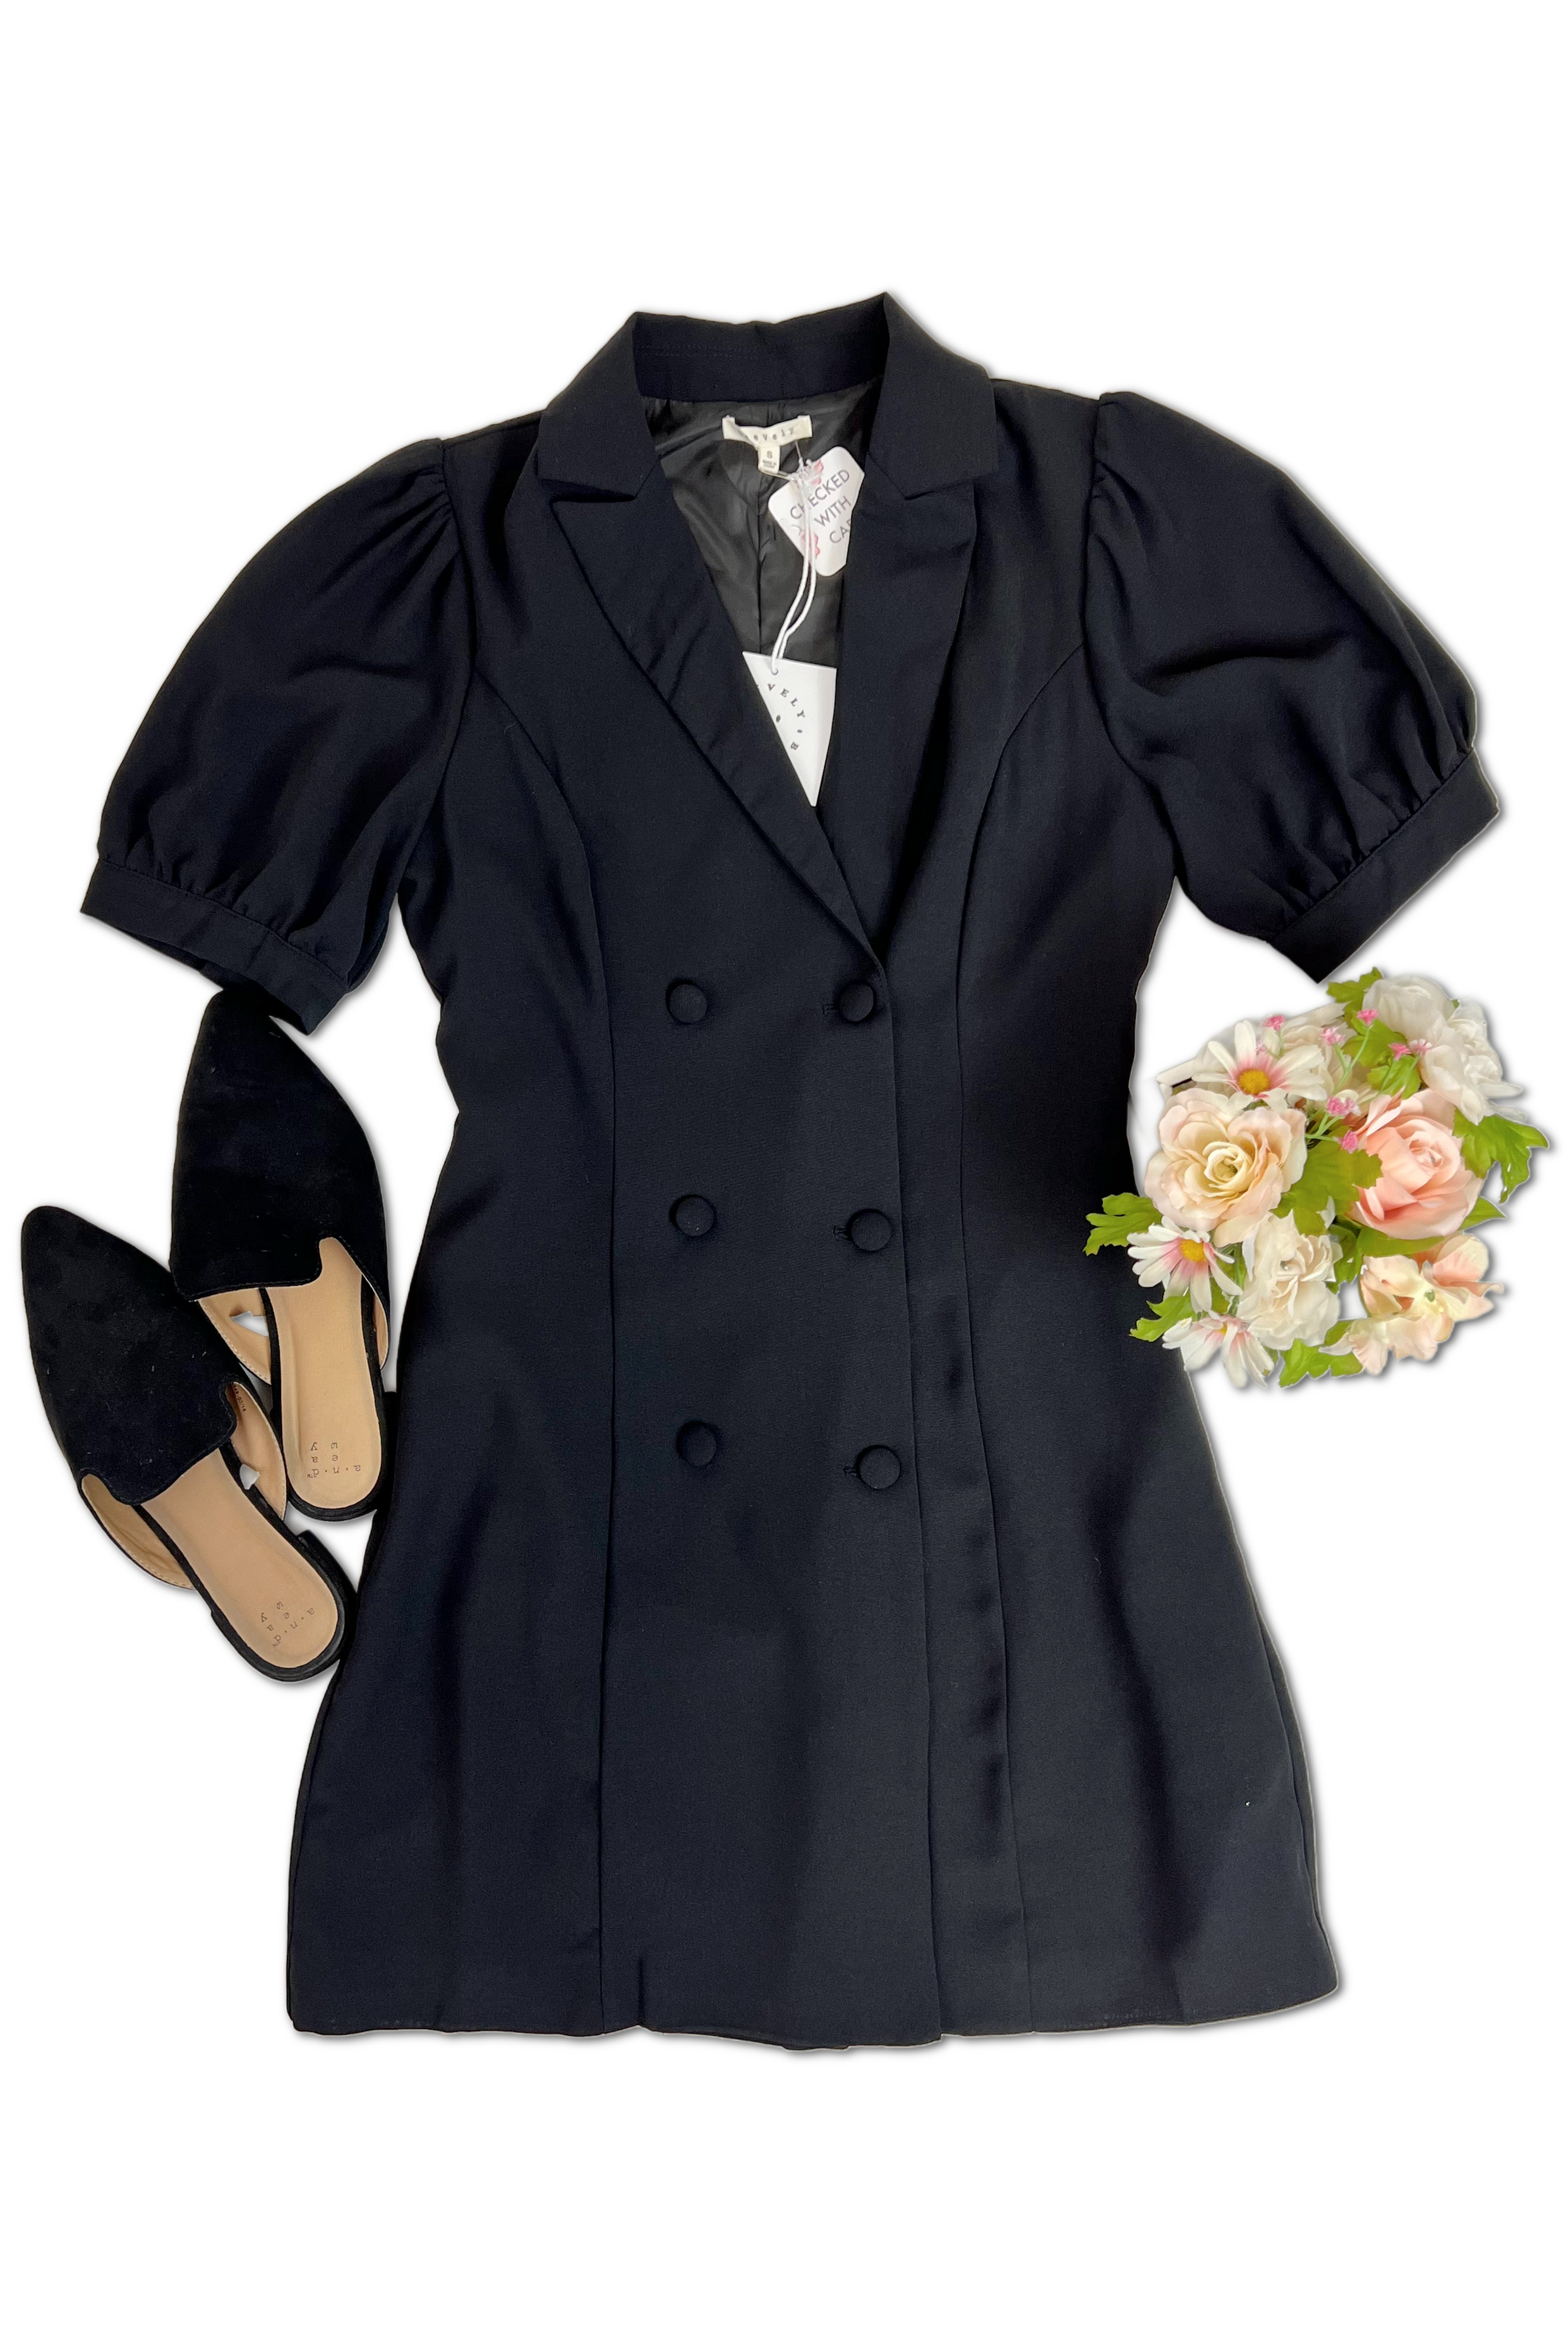 (06-11-24 Tuesday) Jacqueline OH! Dress - Black-Dresses-OOTD Boutique Simplified-Urban Threadz Boutique, Women's Fashion Boutique in Saugatuck, MI